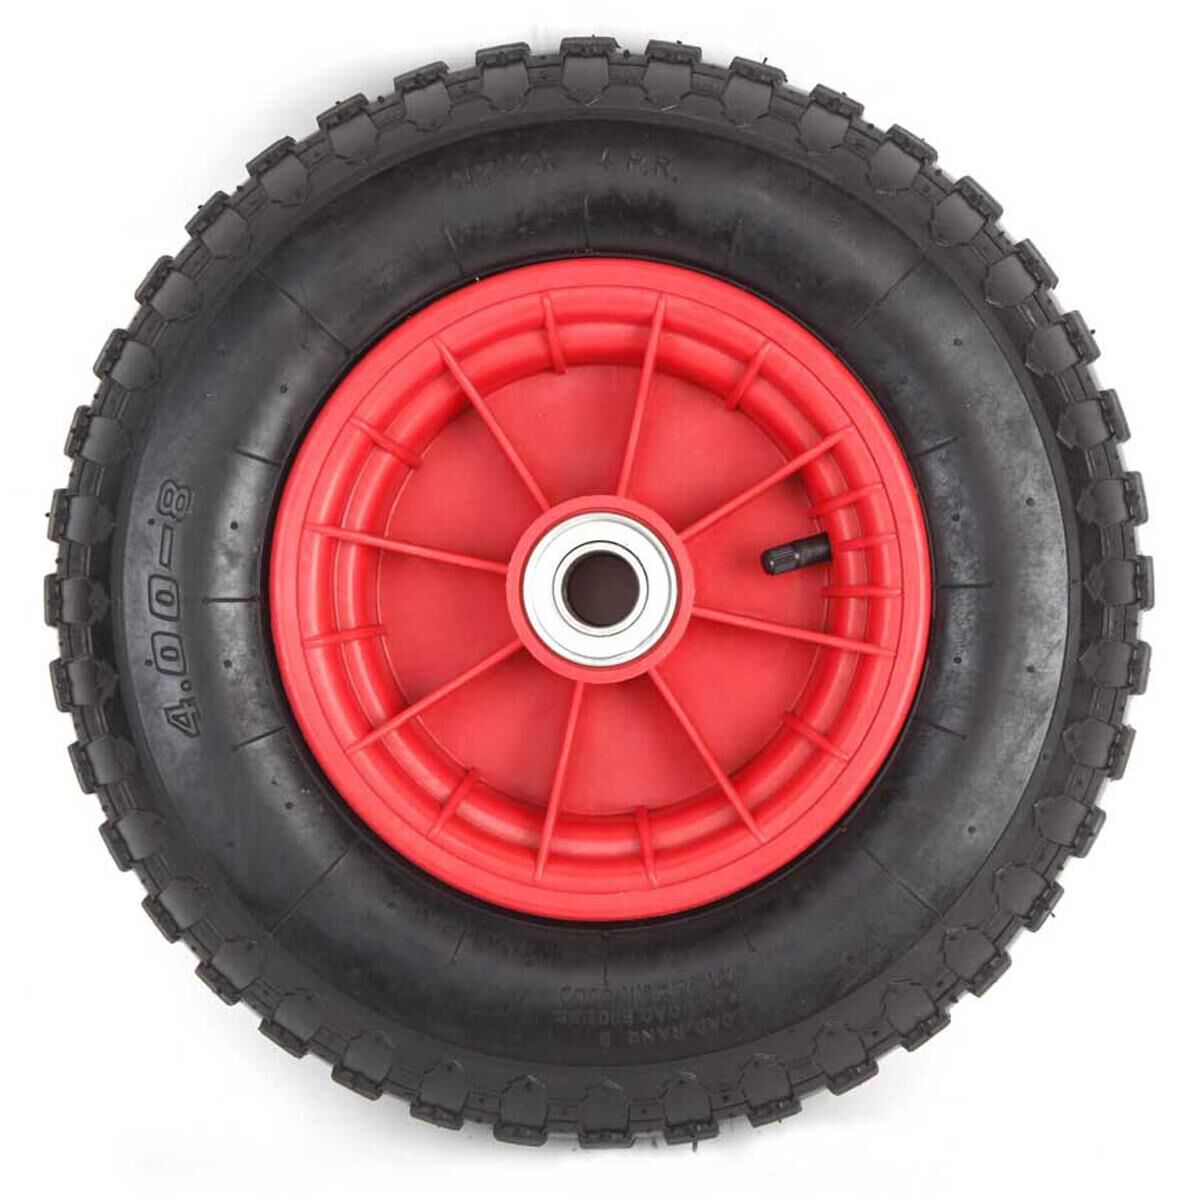 16 mm center Proof 4.8/4.0-8 16x4.50-8 Solid Tyre Wheel Wheelbarrow Flat Free 